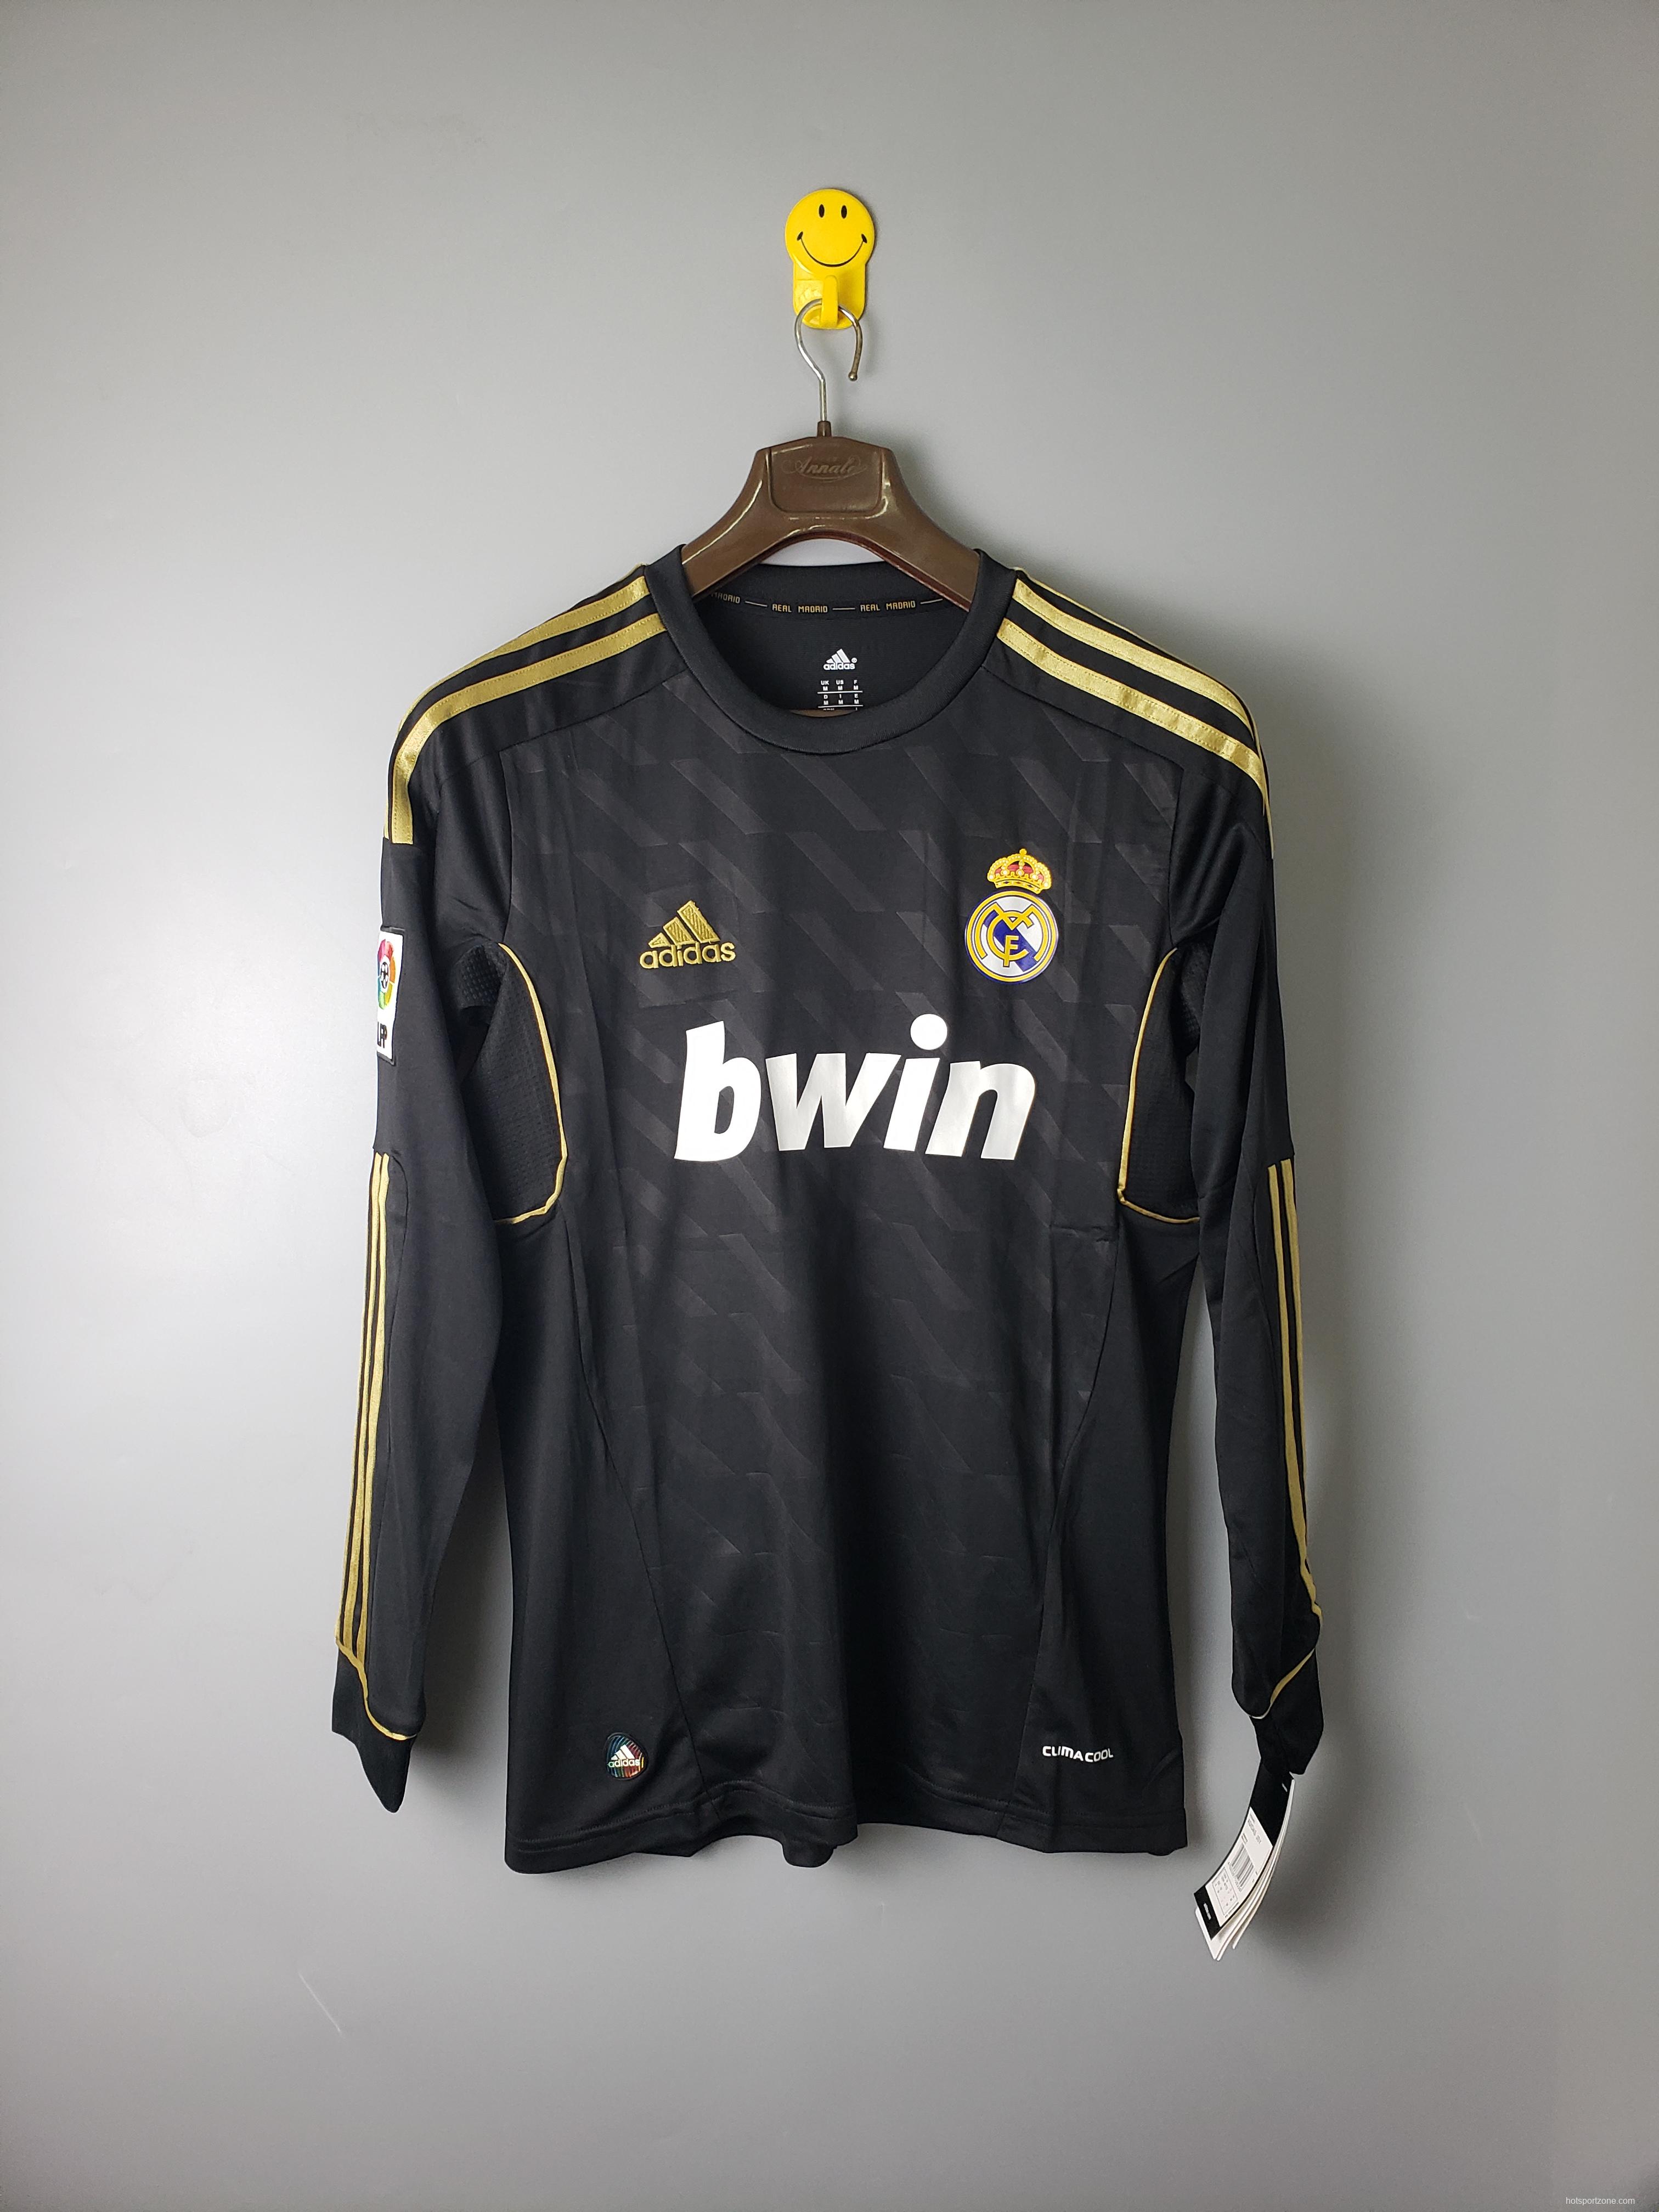 2012 Real Madrid black long sleeves Soccer Jersey